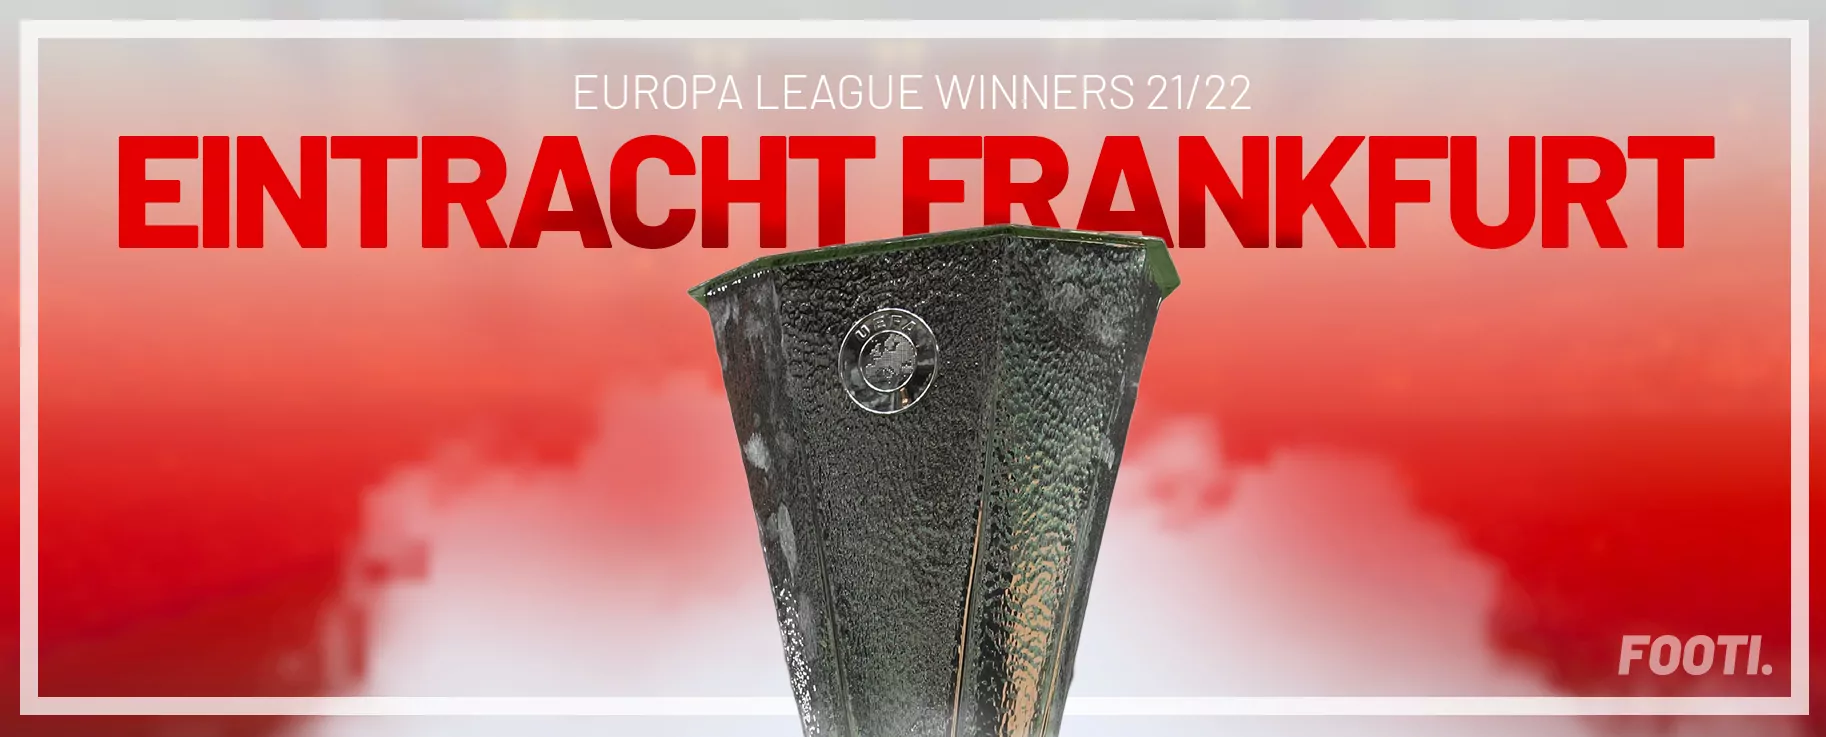  🏆 Eintracht Frankfurt are the 21/22 Europa League winners.